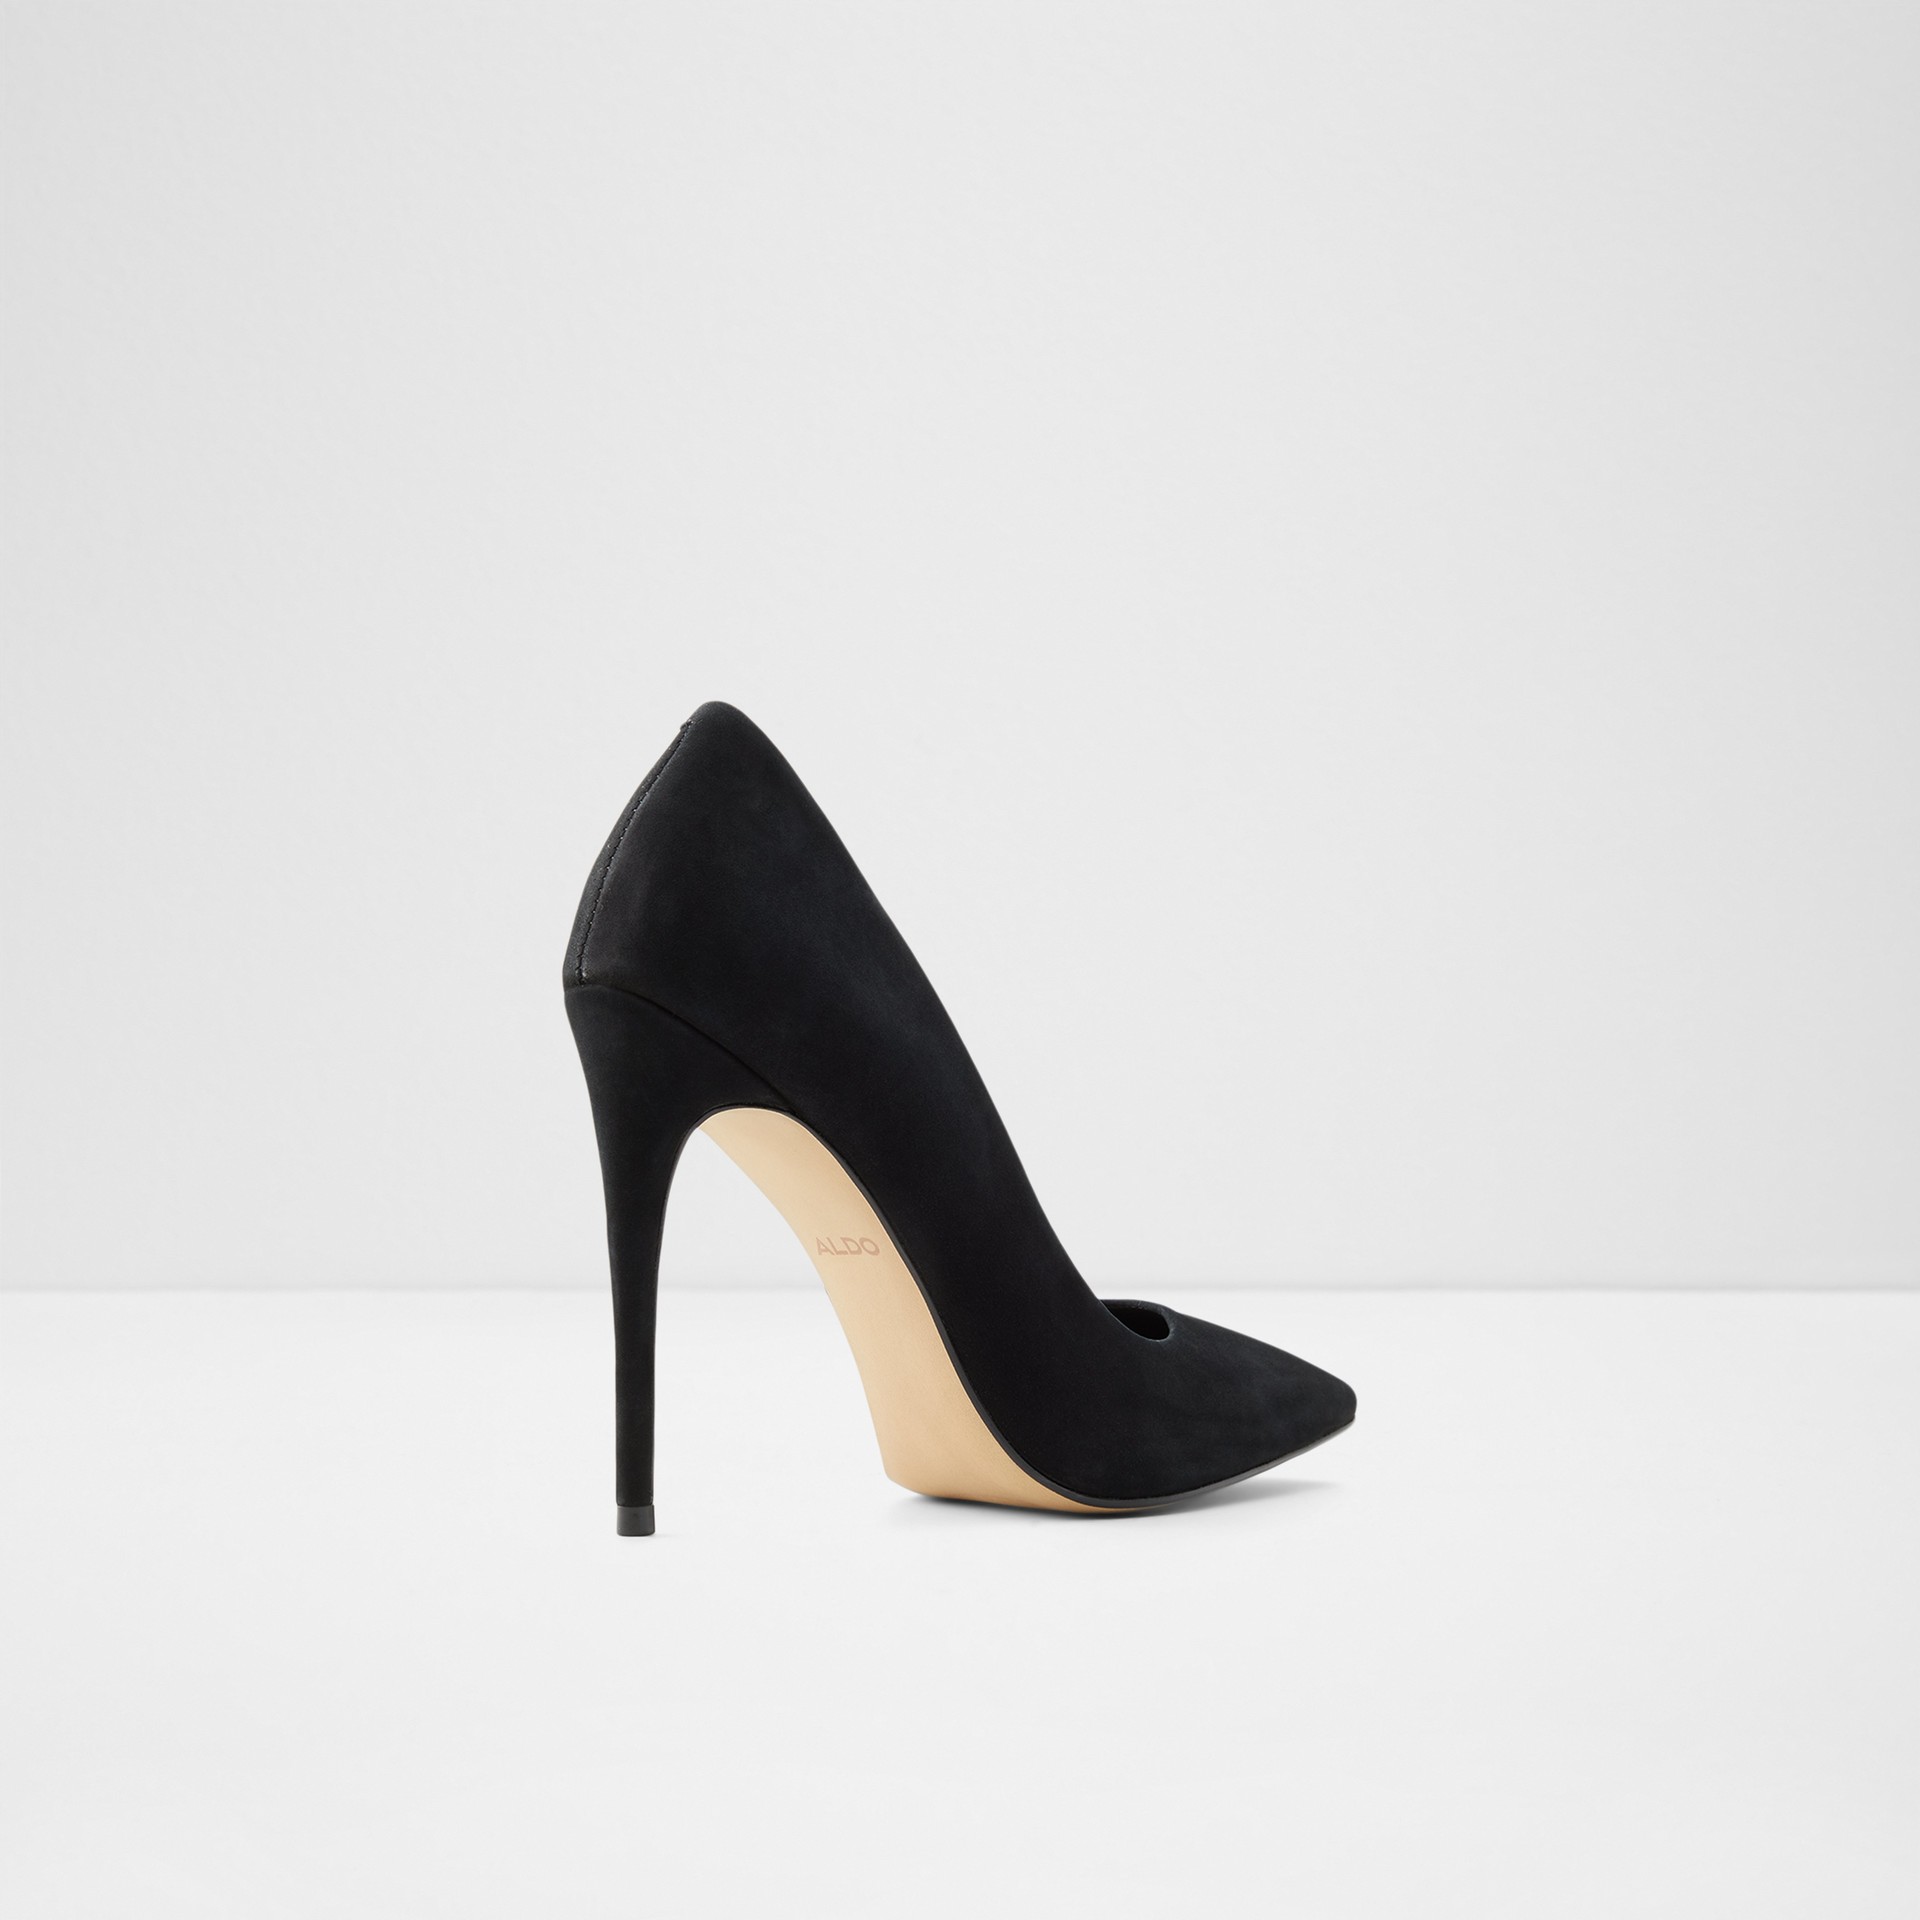 Zapatos de salón para mujer en piel negro RALIVIA 001001031 | ALDO Shoes España